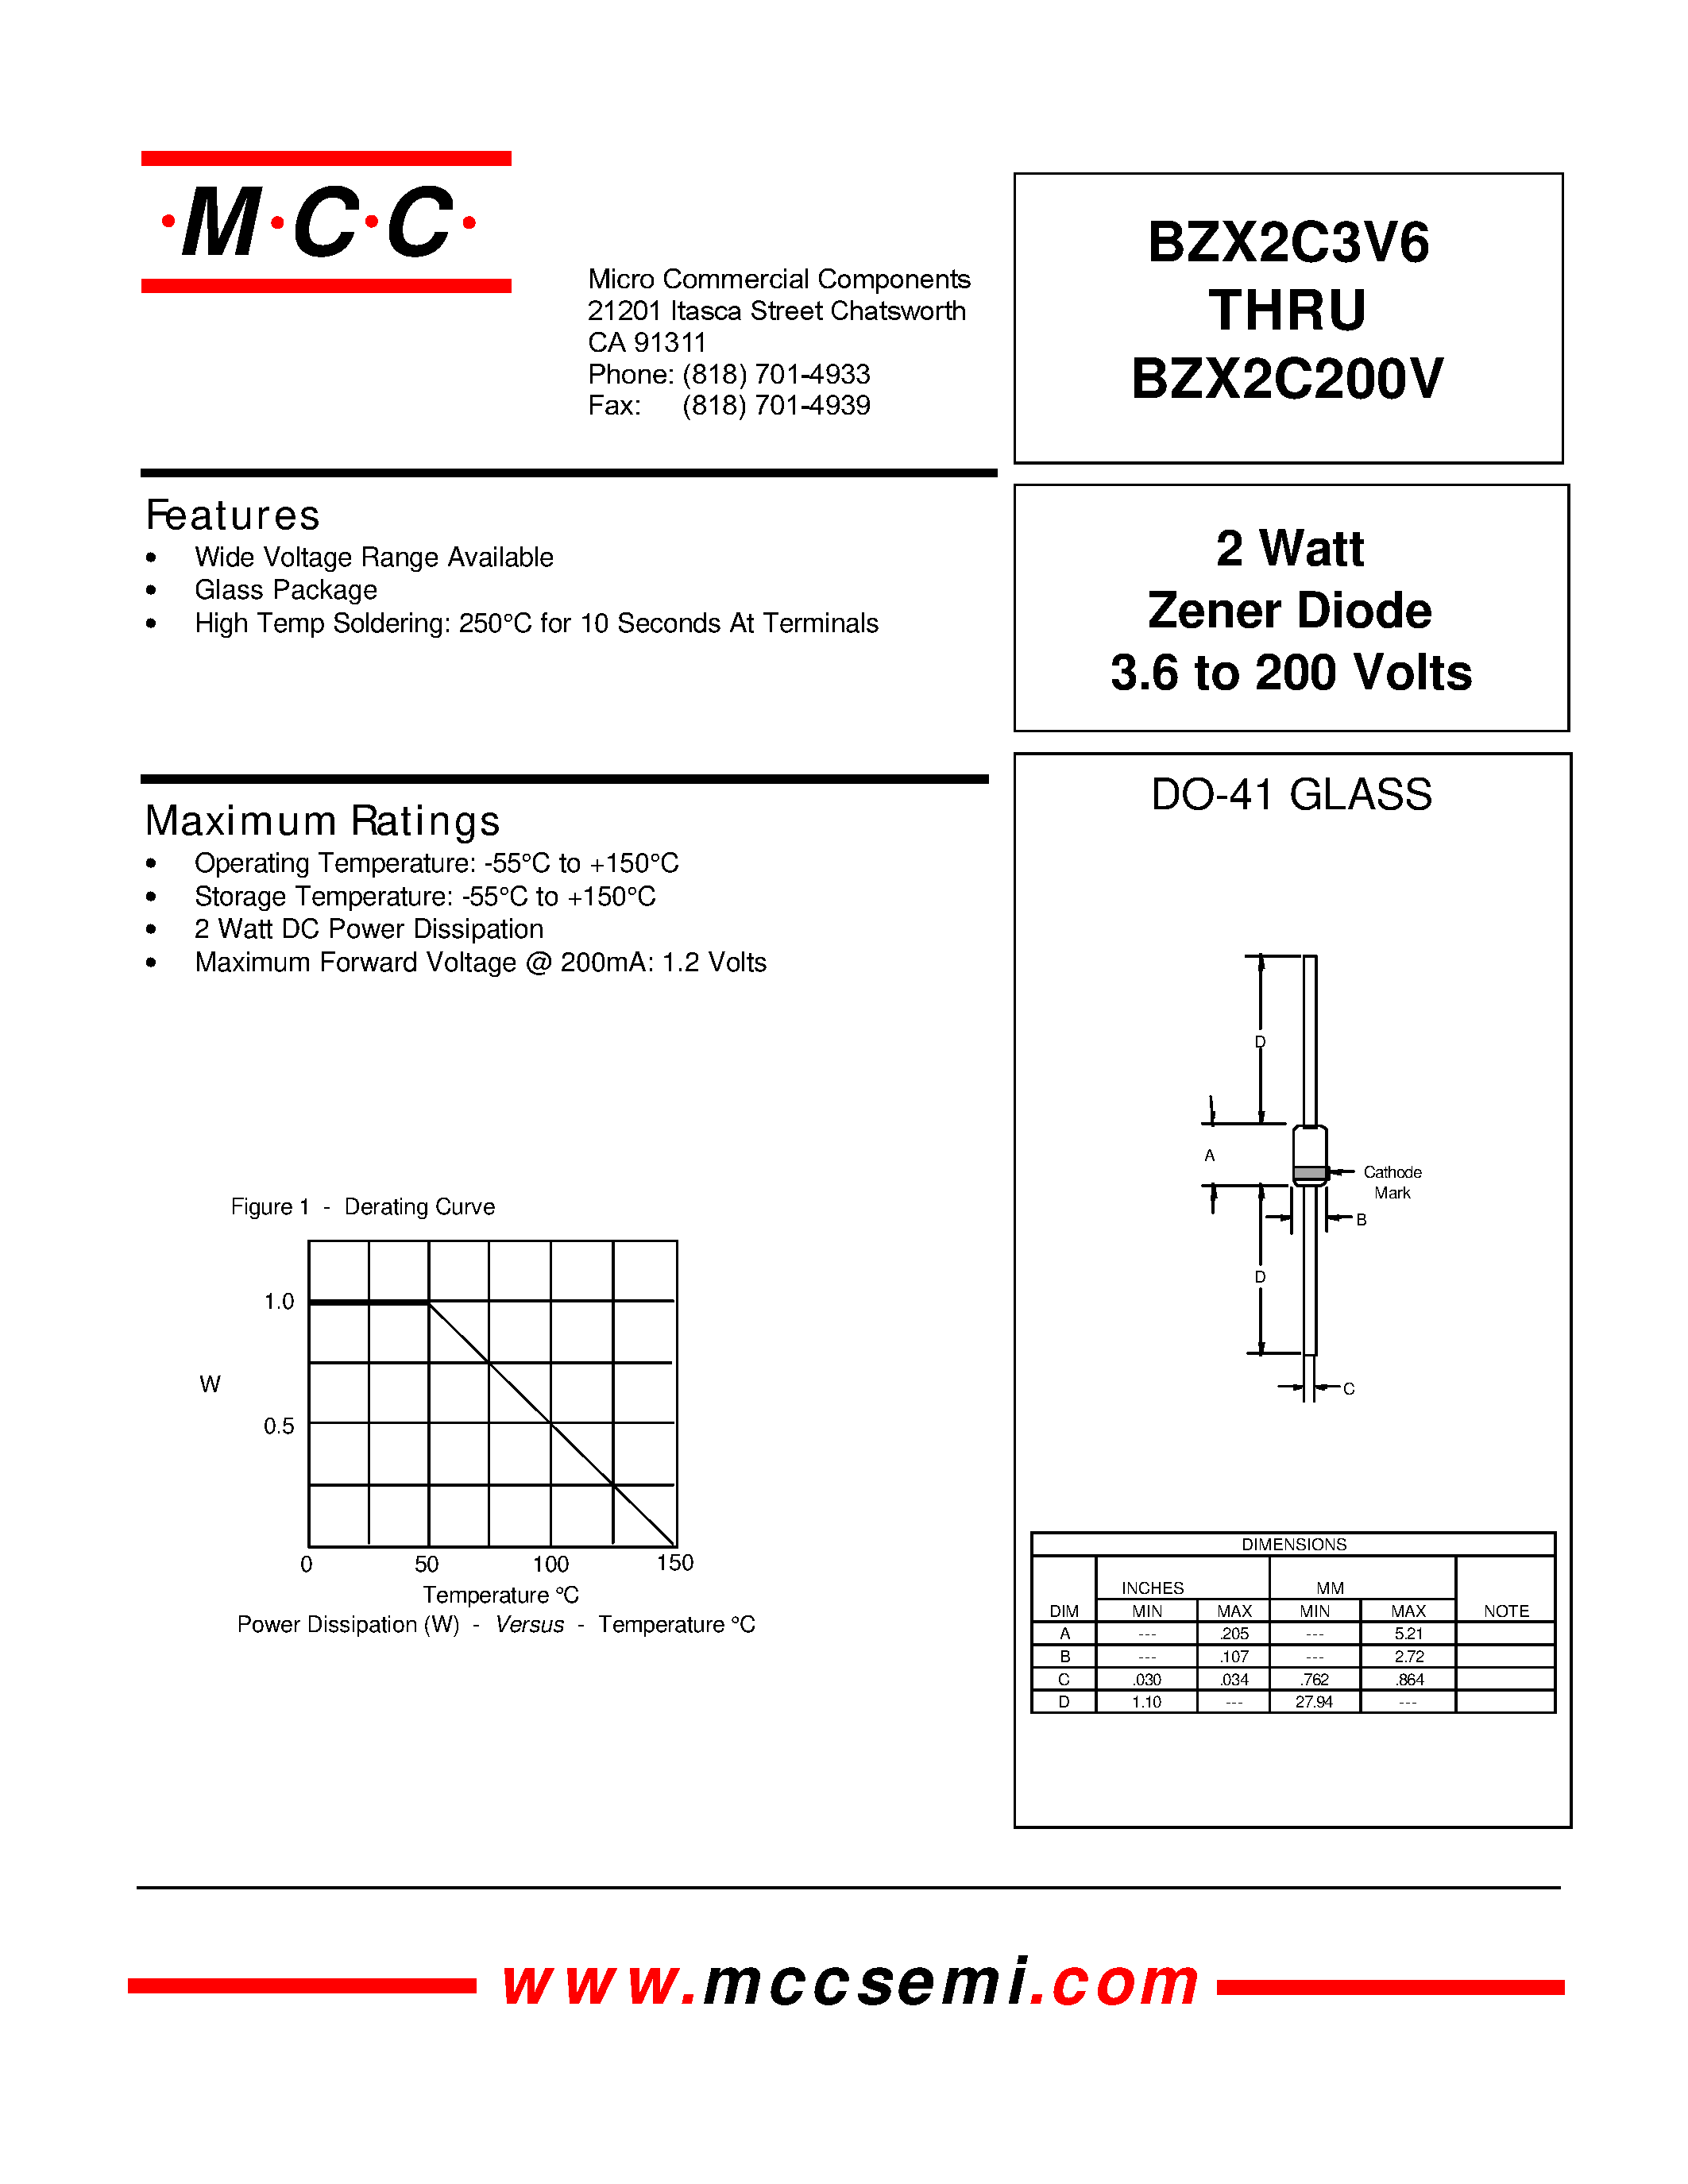 Datasheet BZX2C91V - 2 Watt Zener Diode 3.6 to 200 Volts page 1